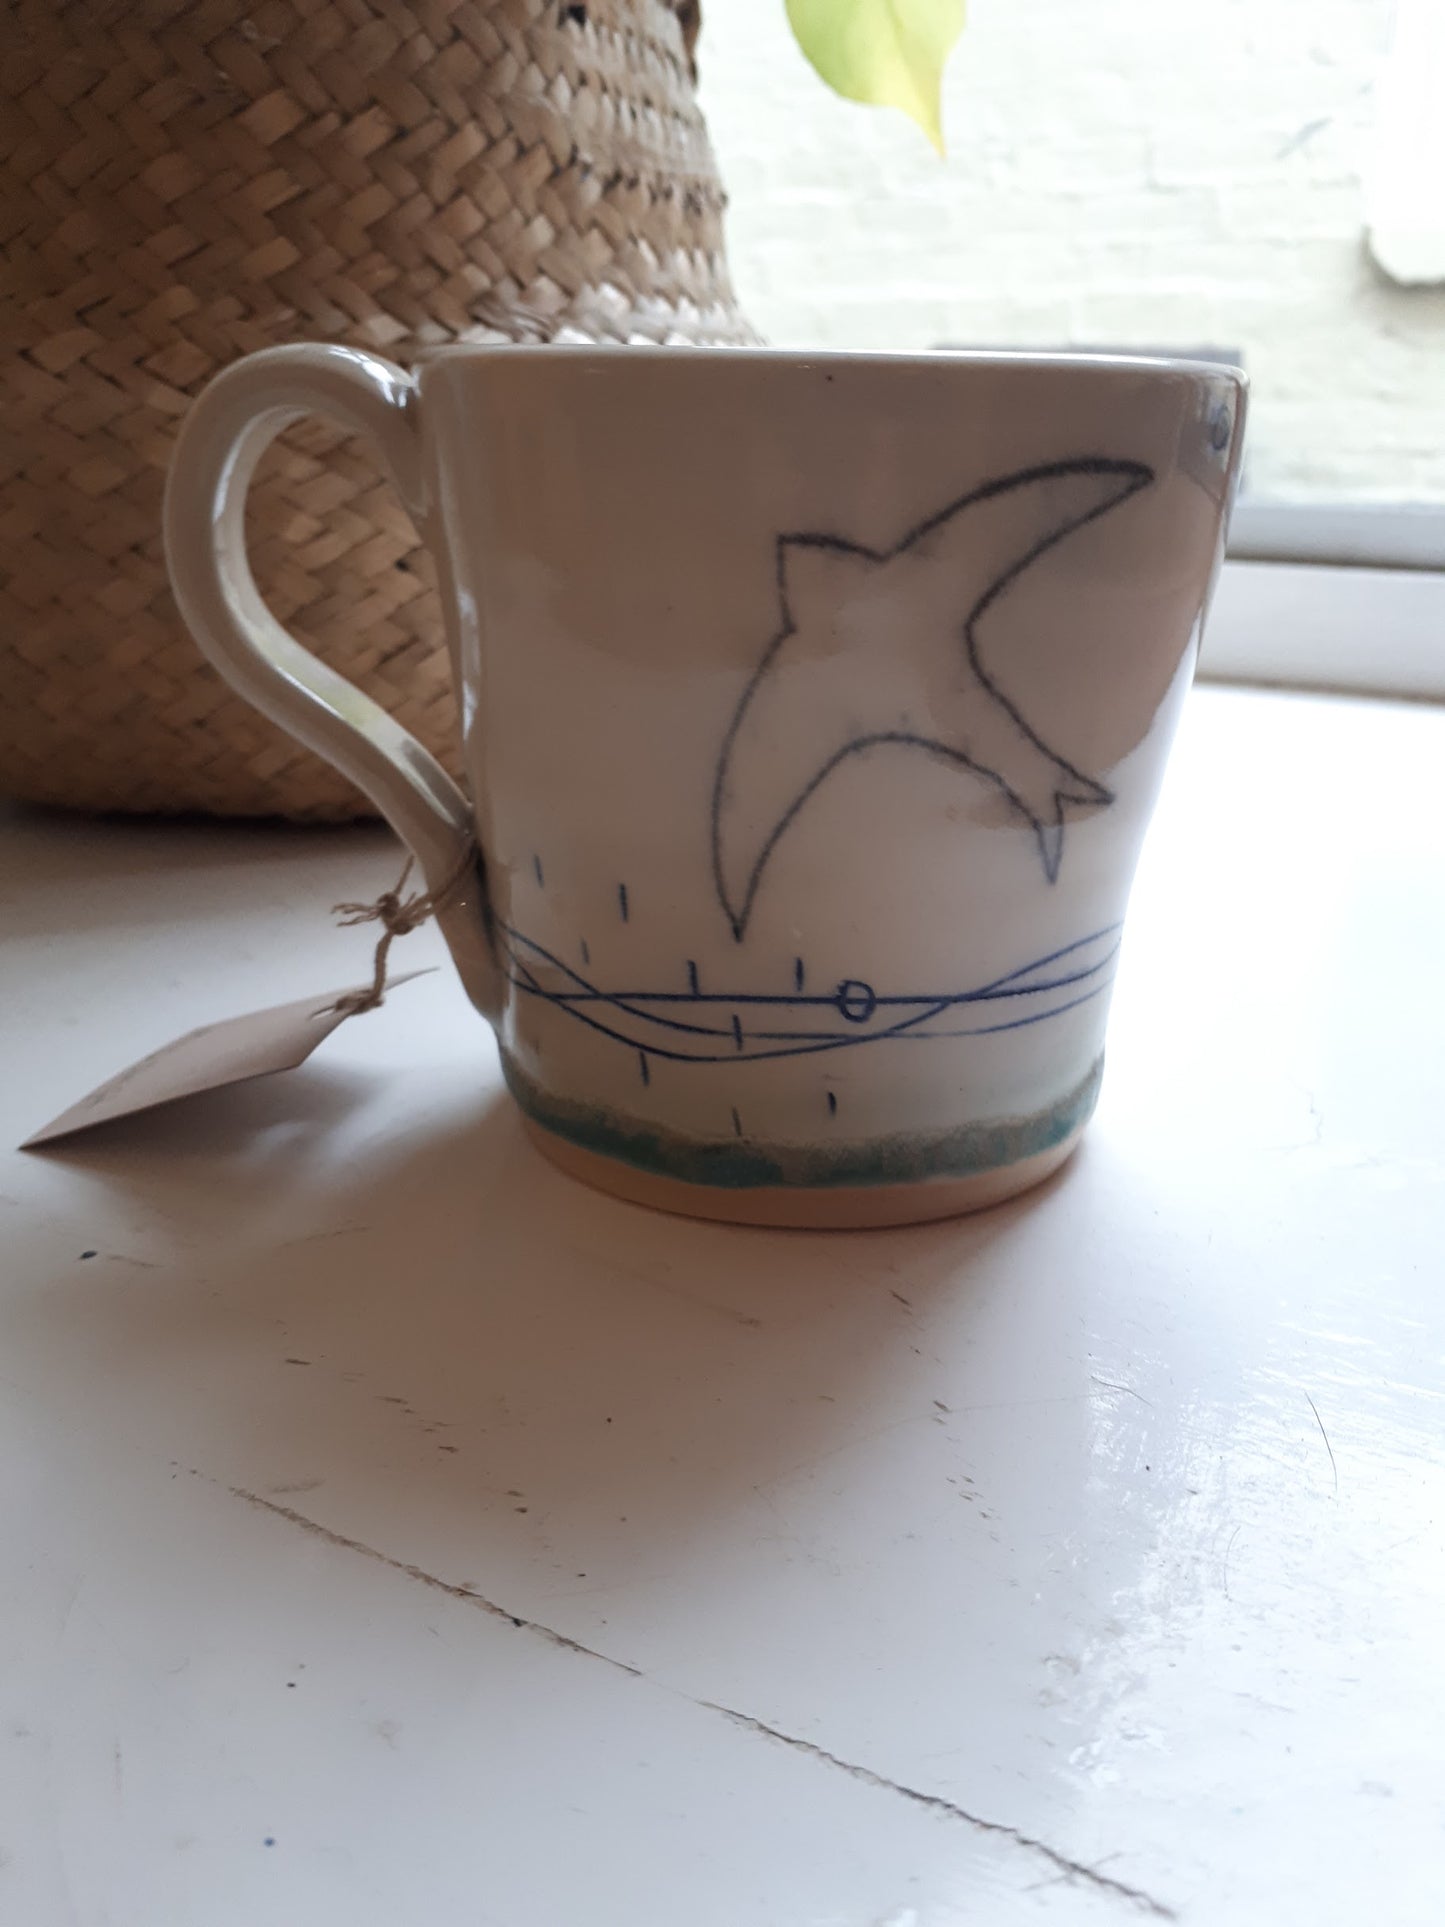 Lorna Gilbert Ceramics - Leaping Hare and Swooping Swift mugs